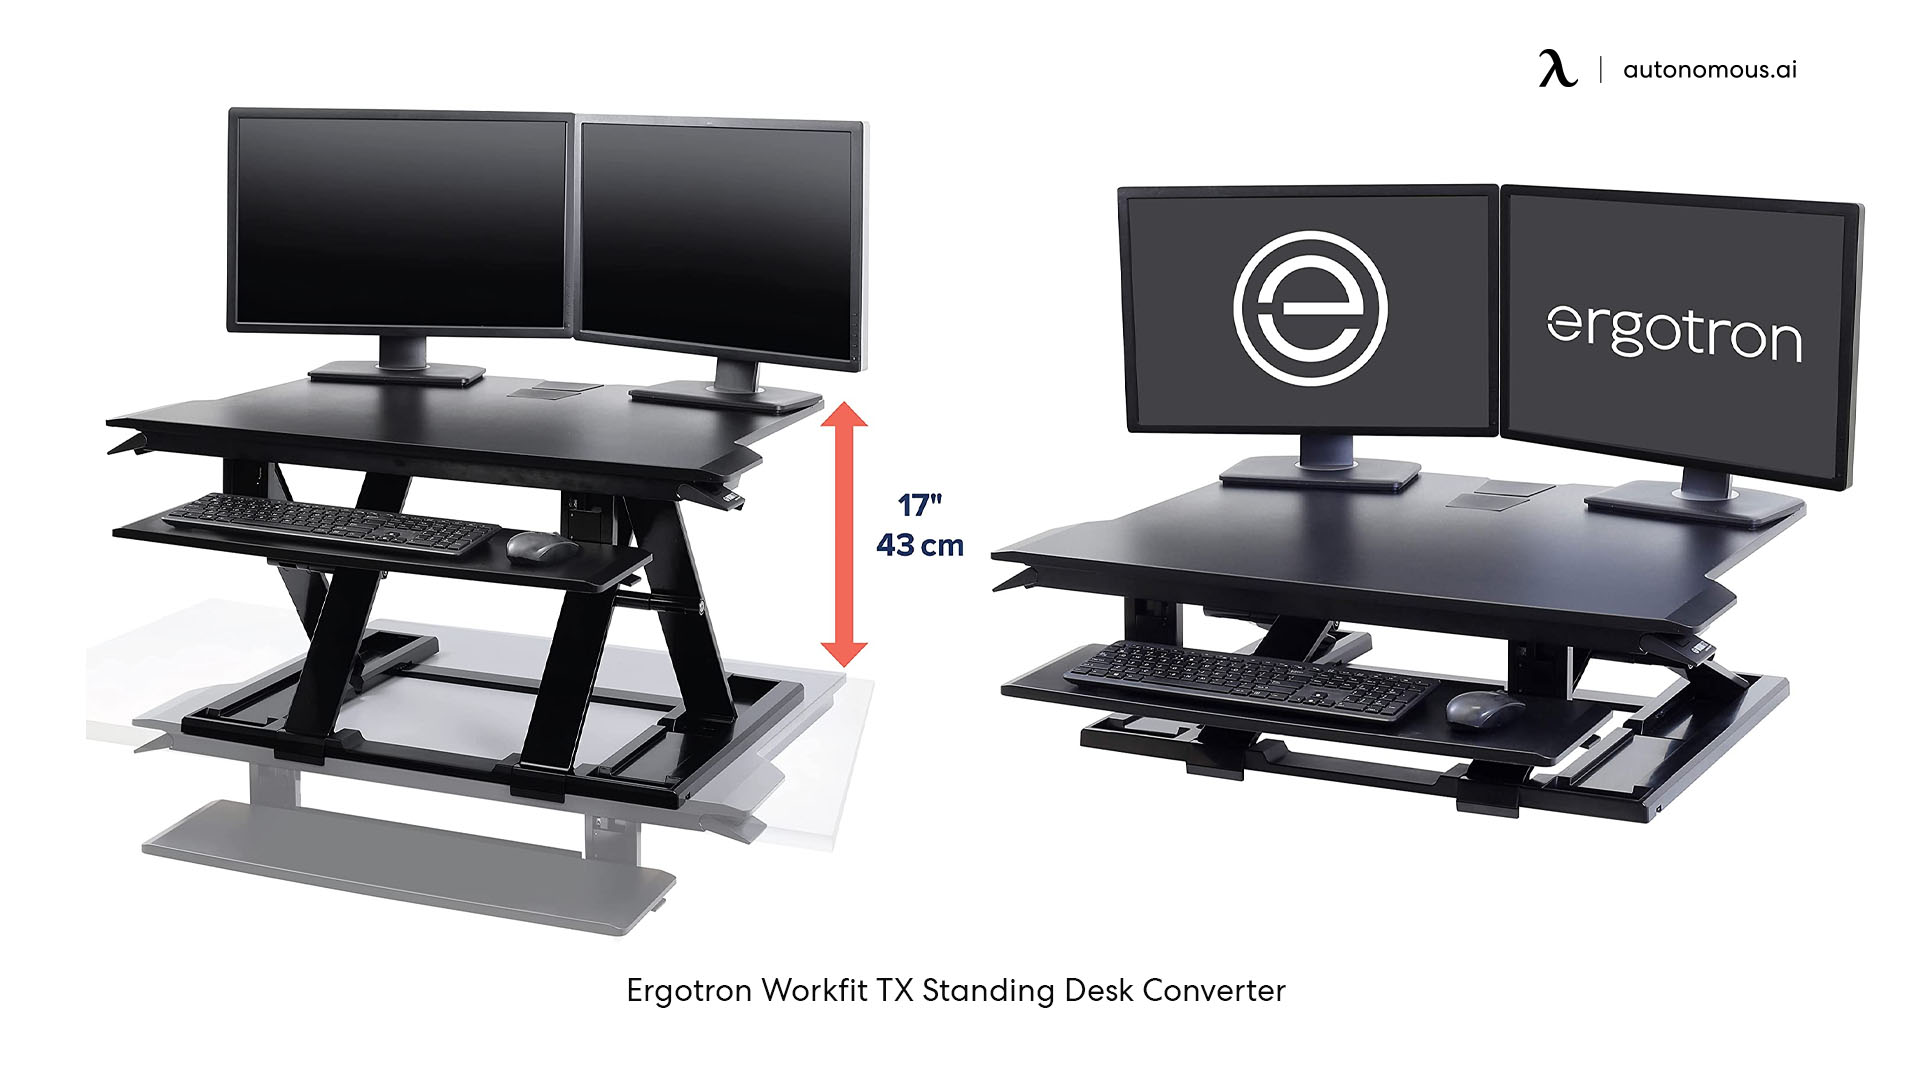 Ergotron WorkFit-T adjustable standing desk converter